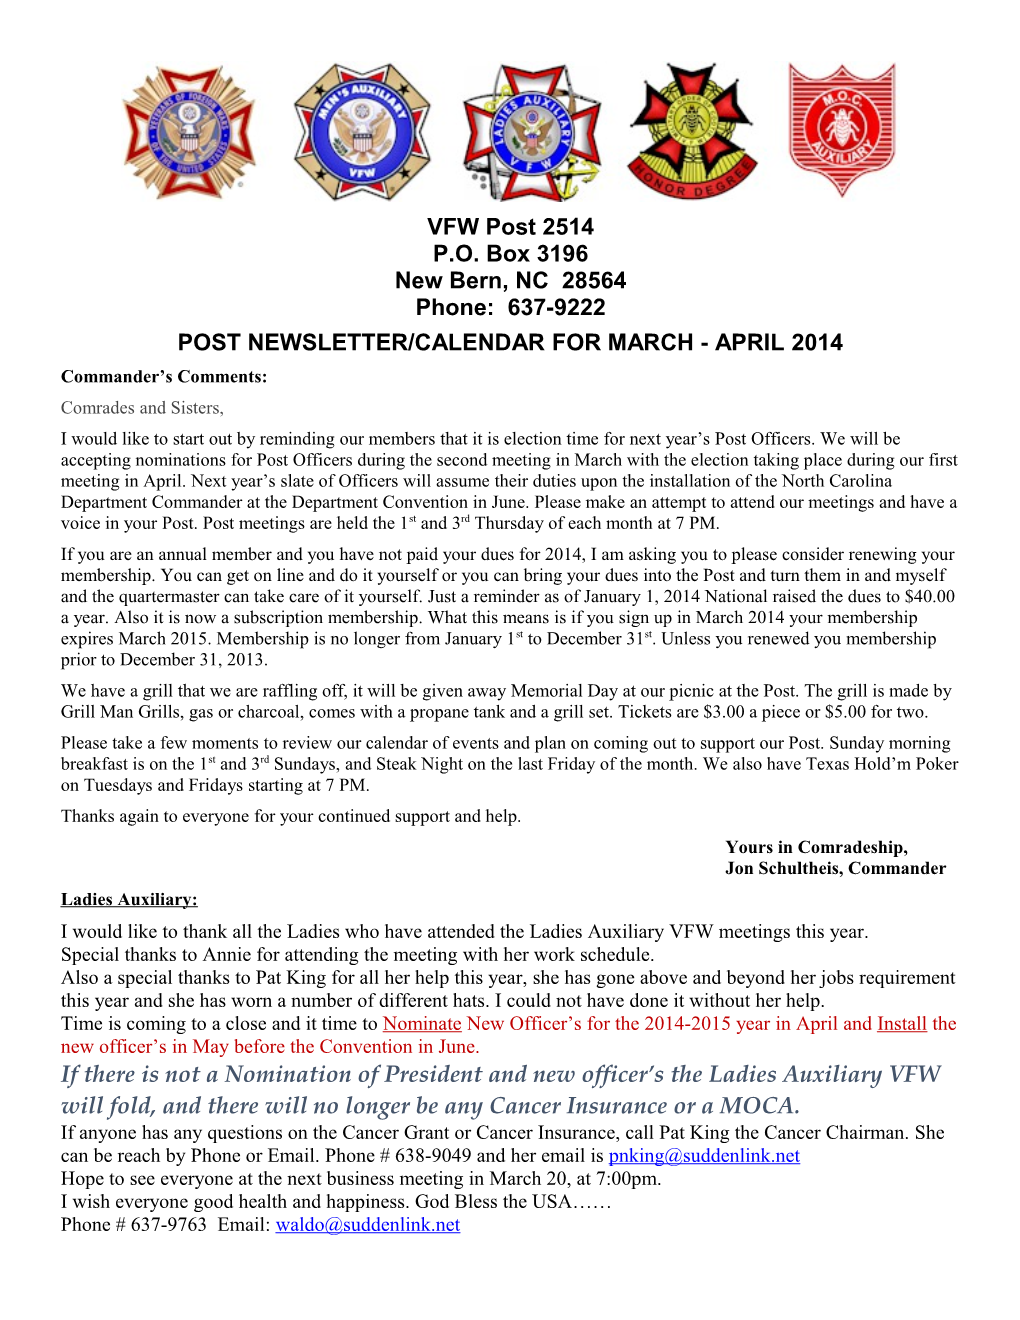 Post Newsletter/Calendar for March - April 2014